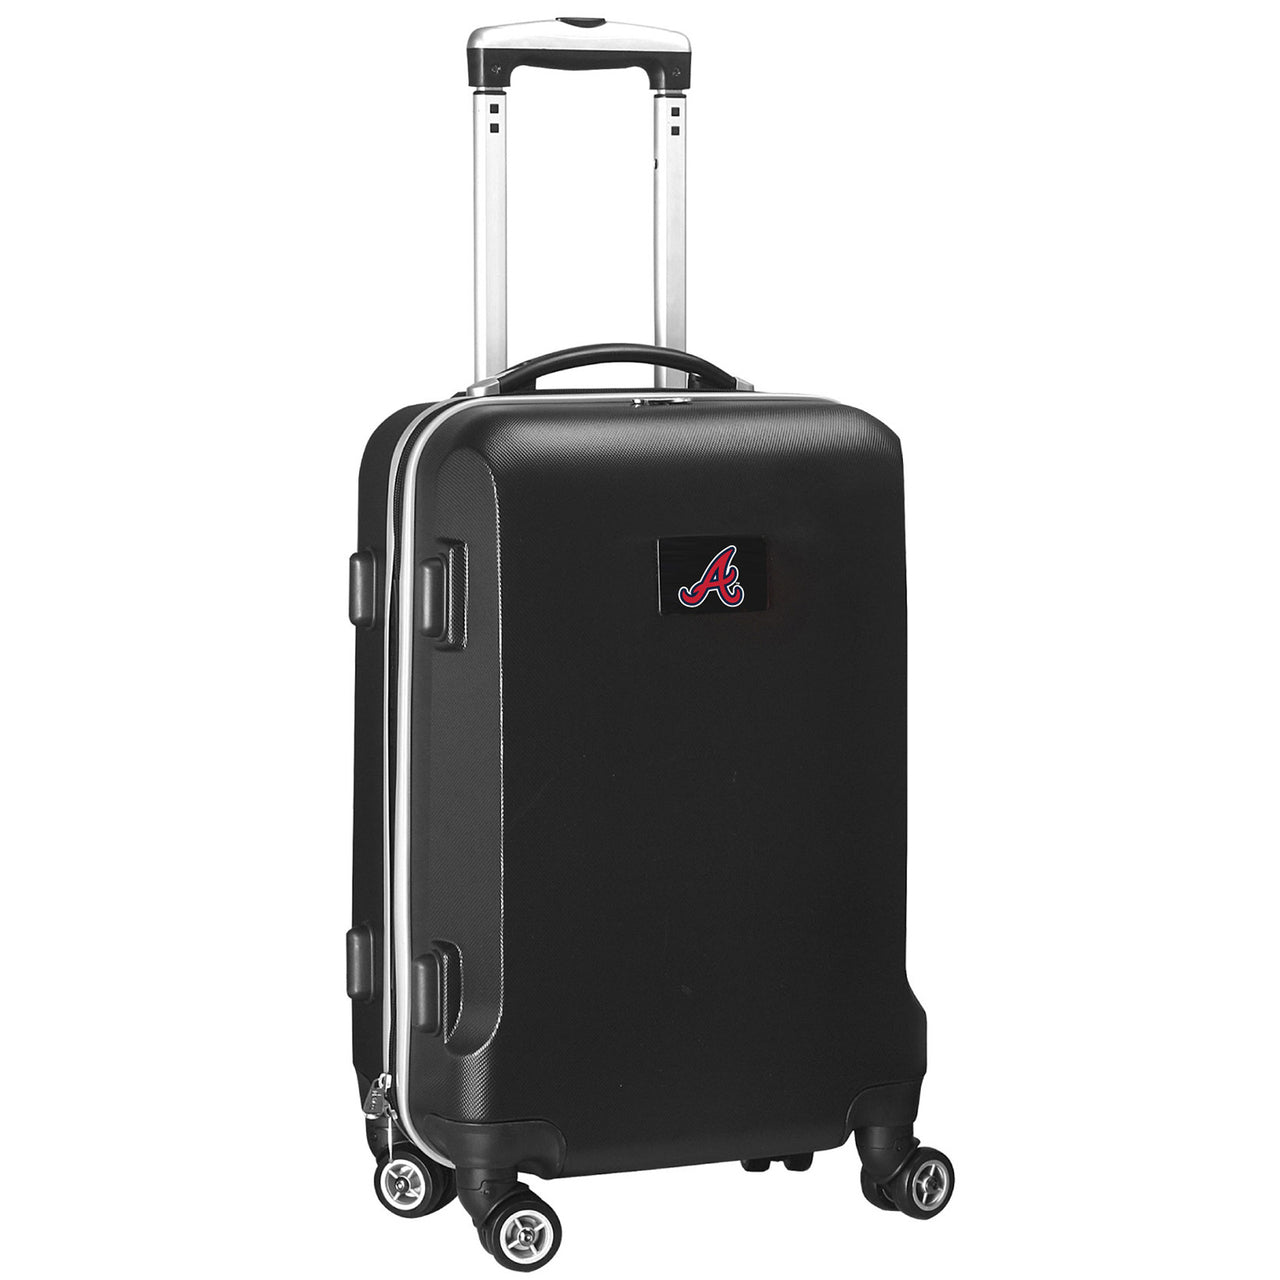 Atlanta Braves 20" Hardcase Luggage Carry-on Spinner in Black